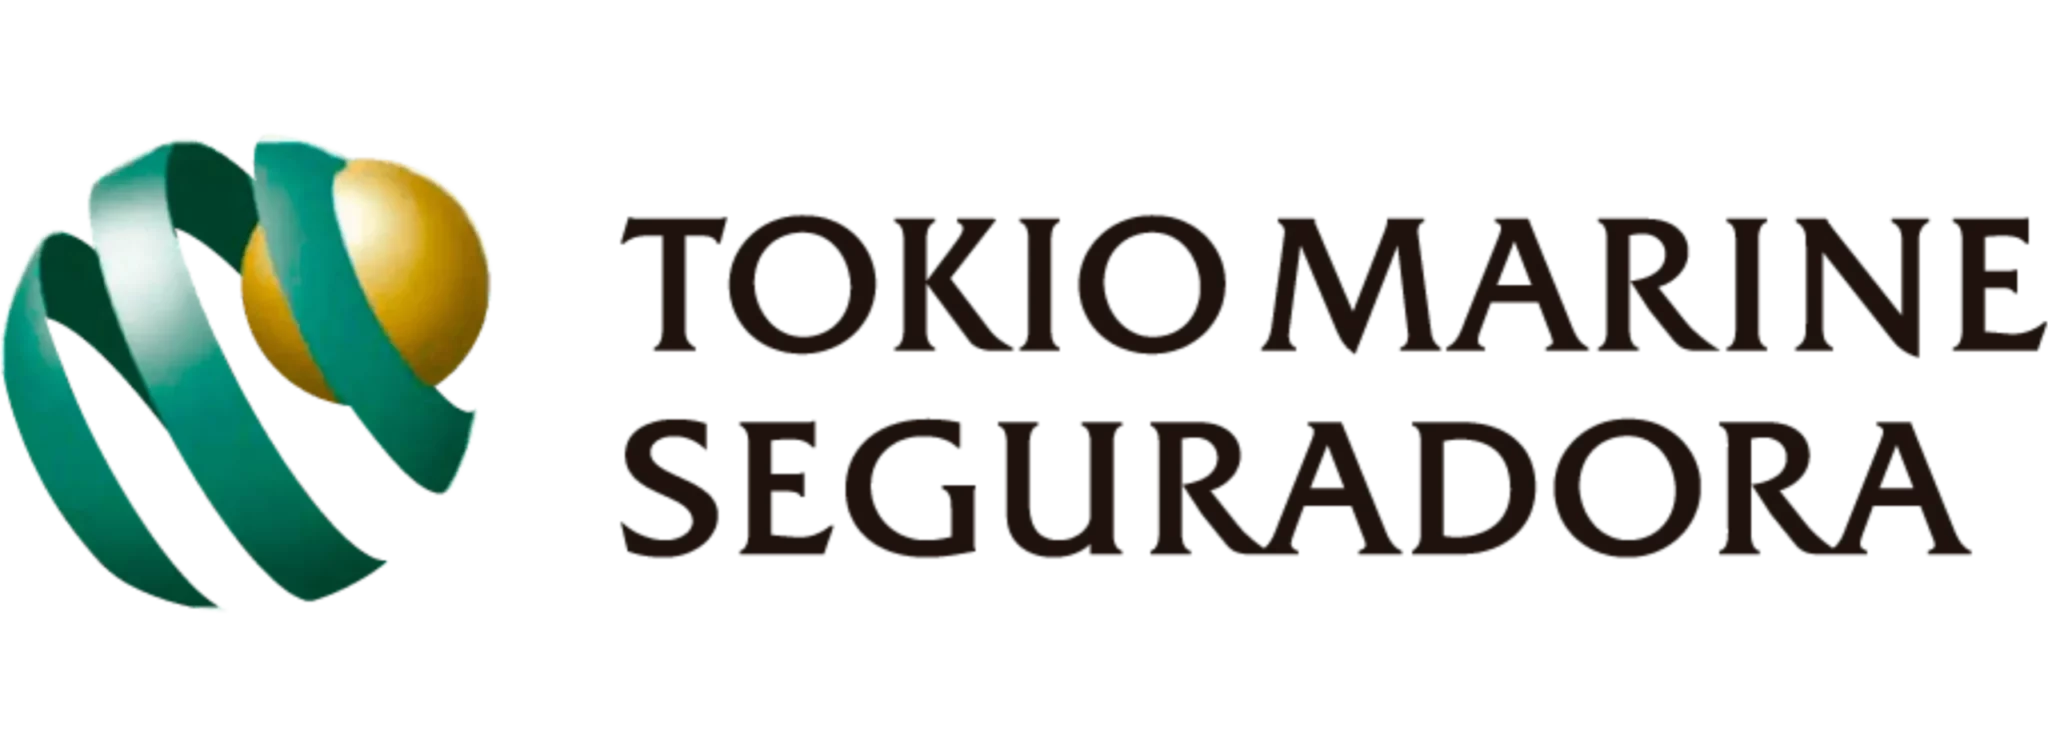 logo-tokio-marine-seguradora-1024-scaled.webp